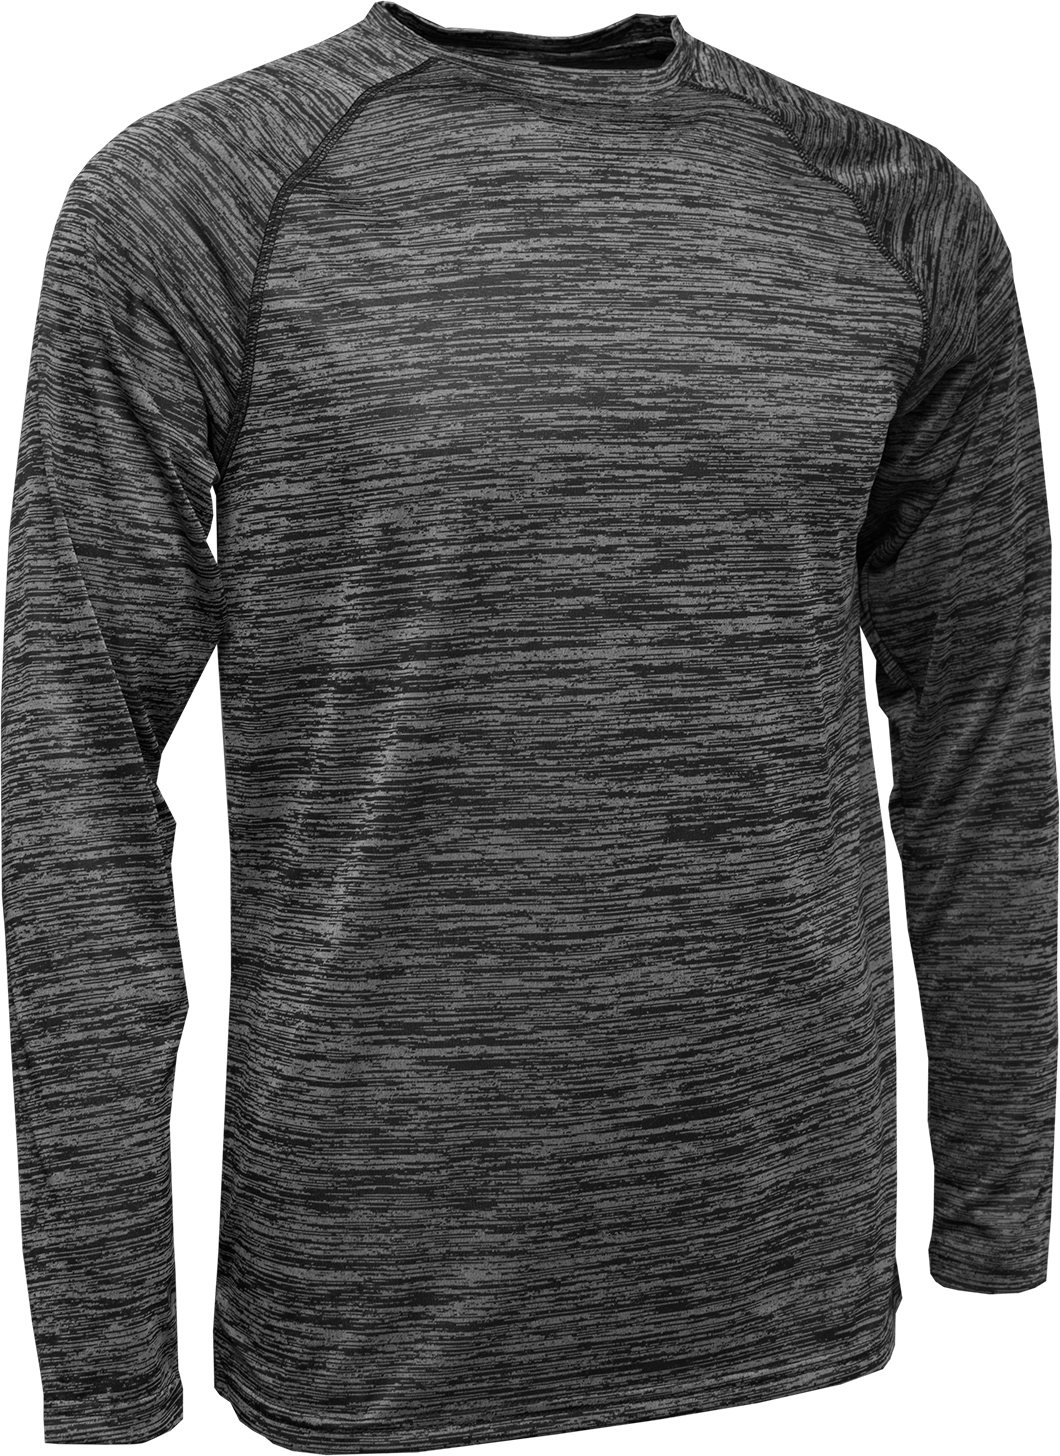 BAW Athletic Wear DT86Y - Youth Dry-Tek Long Sleeve Shirt